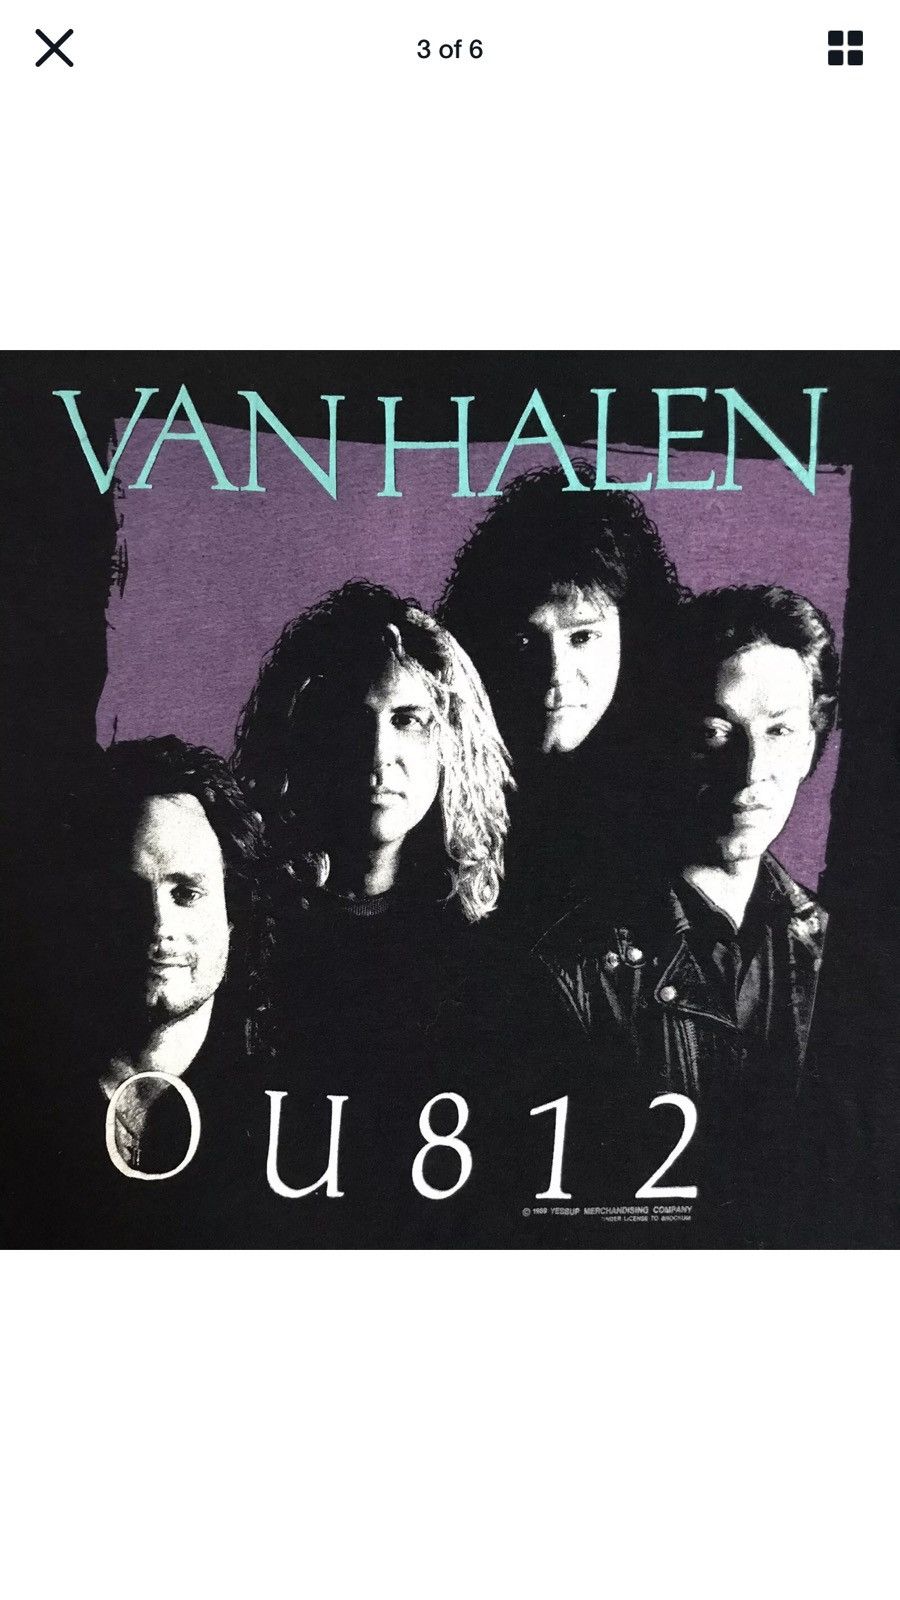 Vintage Van Halen OU812 Tour T Shirt 1989 Size Small Size US S / EU 44-46 / 1 - 3 Thumbnail